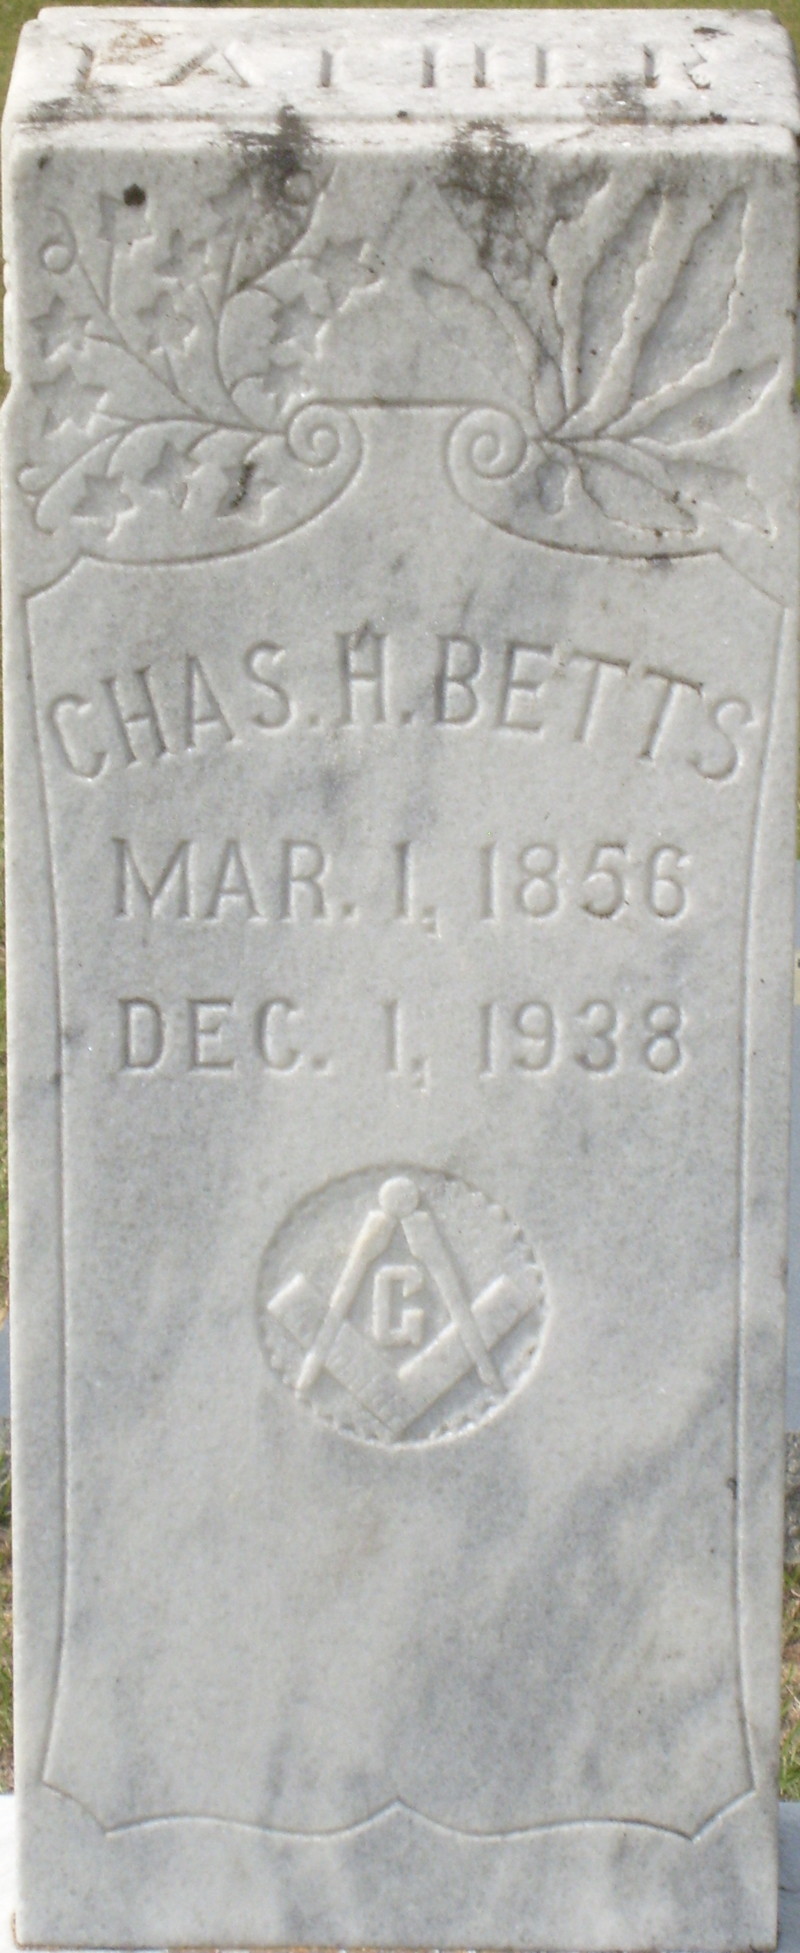 Charles Howard Betts